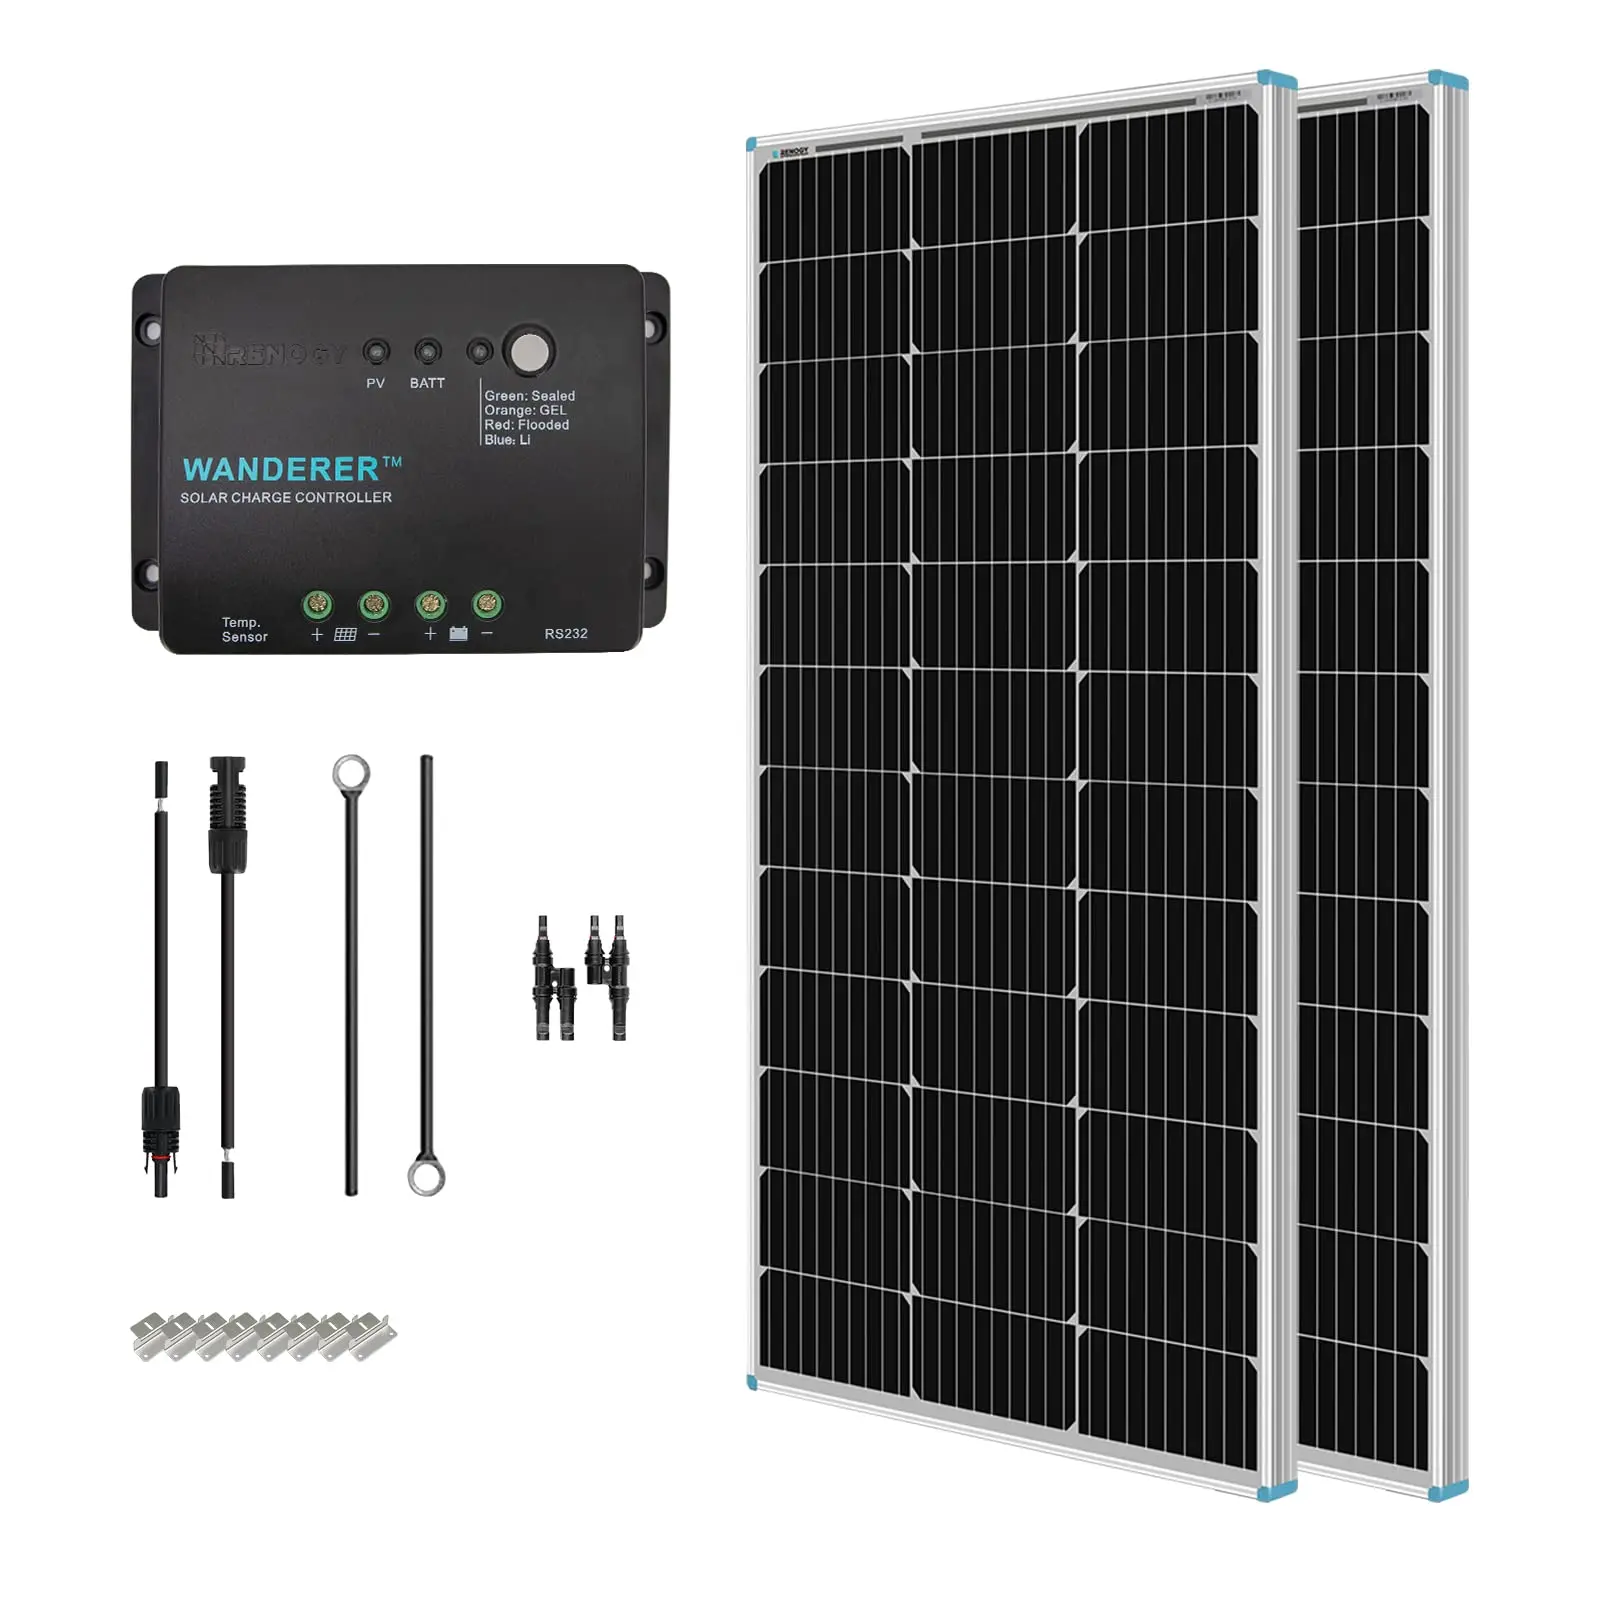 200 watt solar panel price - How good is a 200-watt solar panel